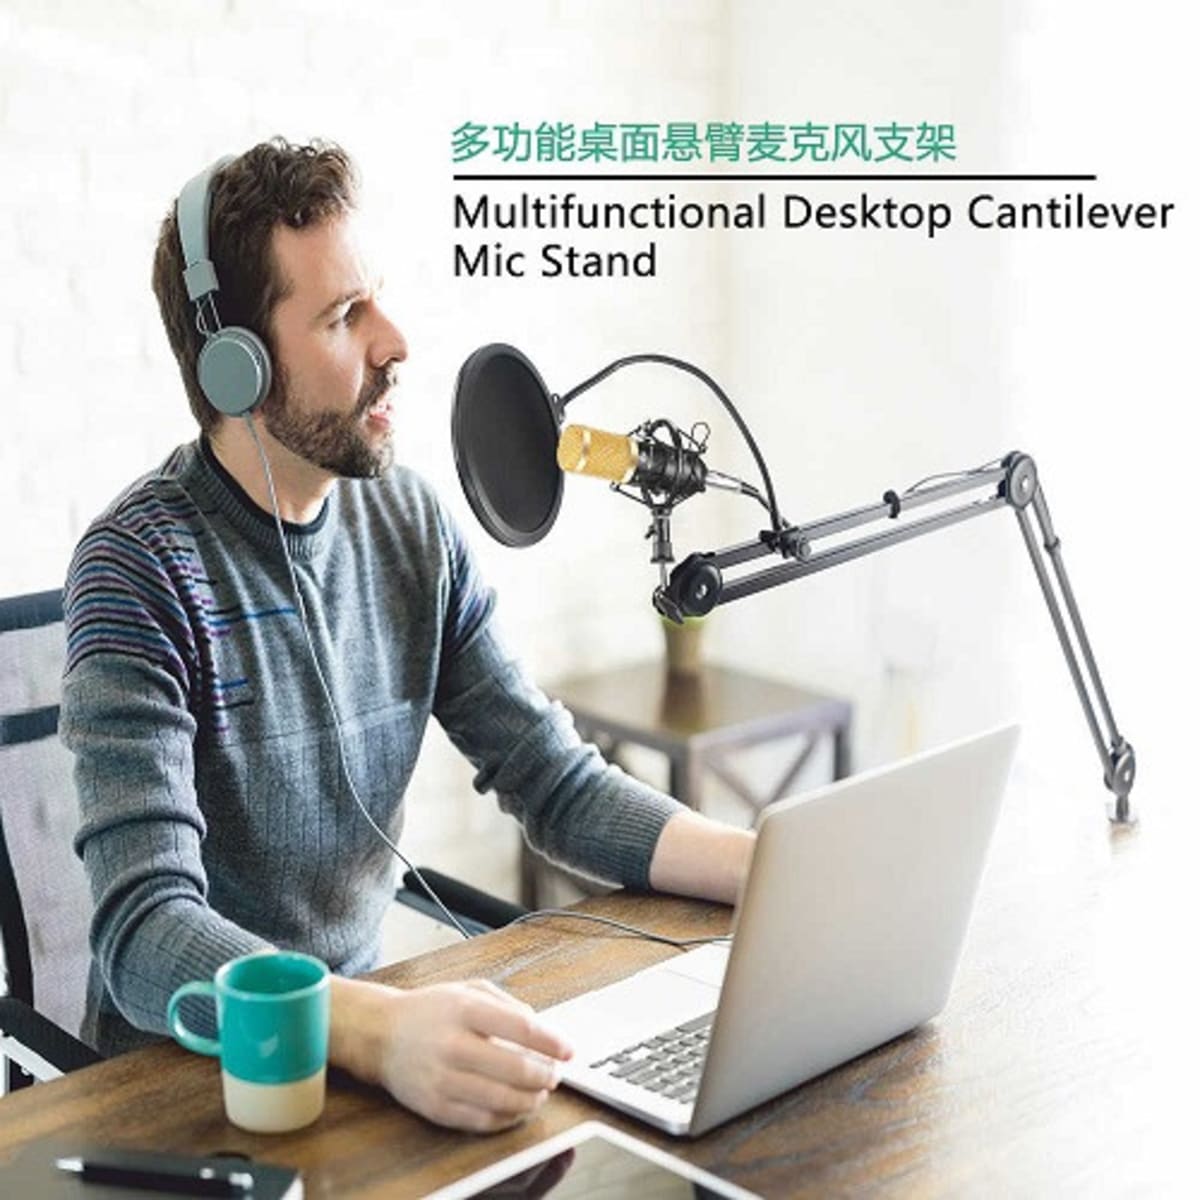 Multifunctional Desktop Mobile Phone Recording Studio Mic Stand